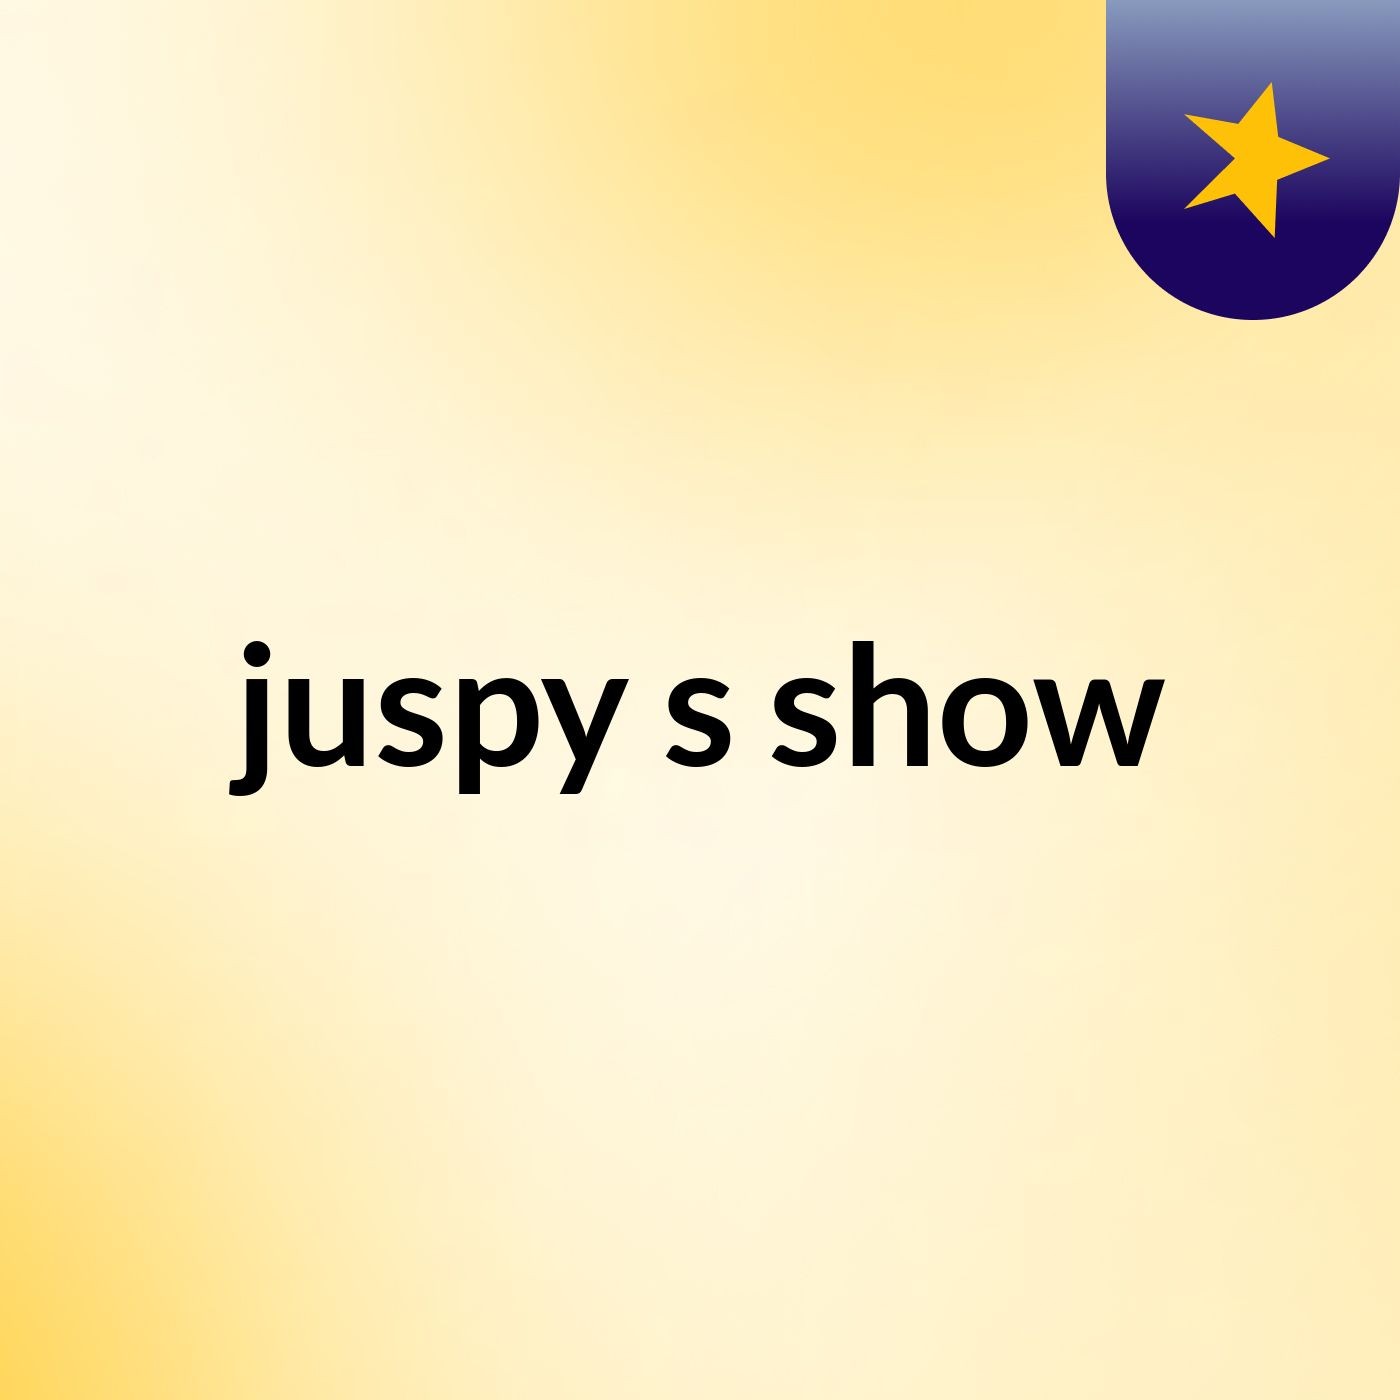 juspy's show